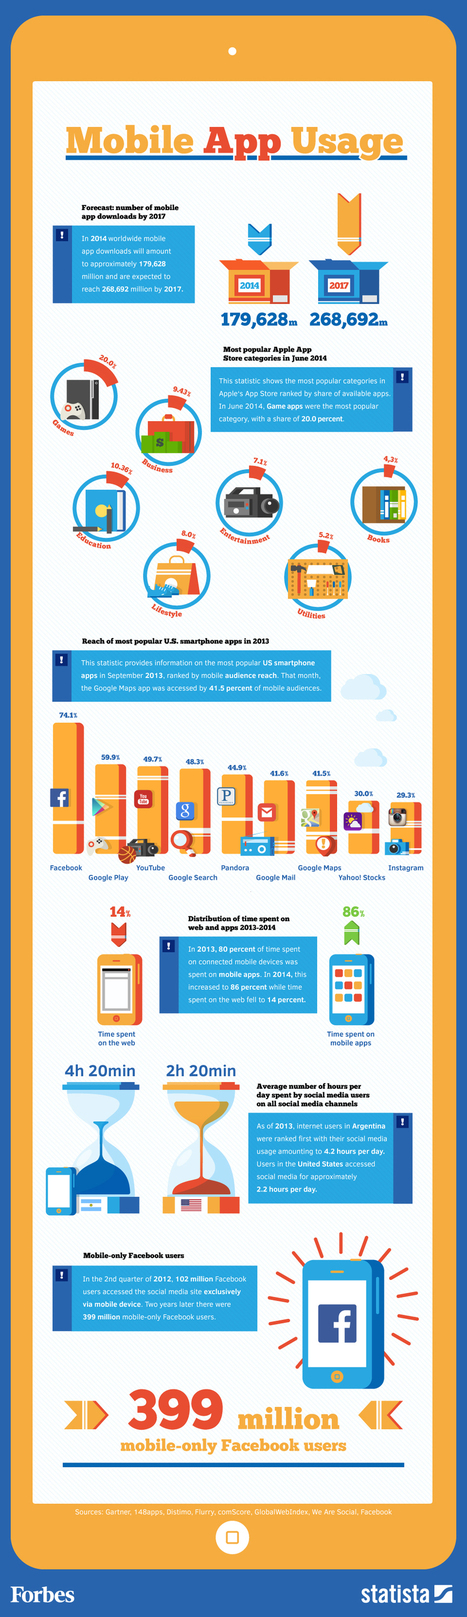 Cómo usamos las APPs móviles #infografia #infographic | Seo, Social Media Marketing | Scoop.it